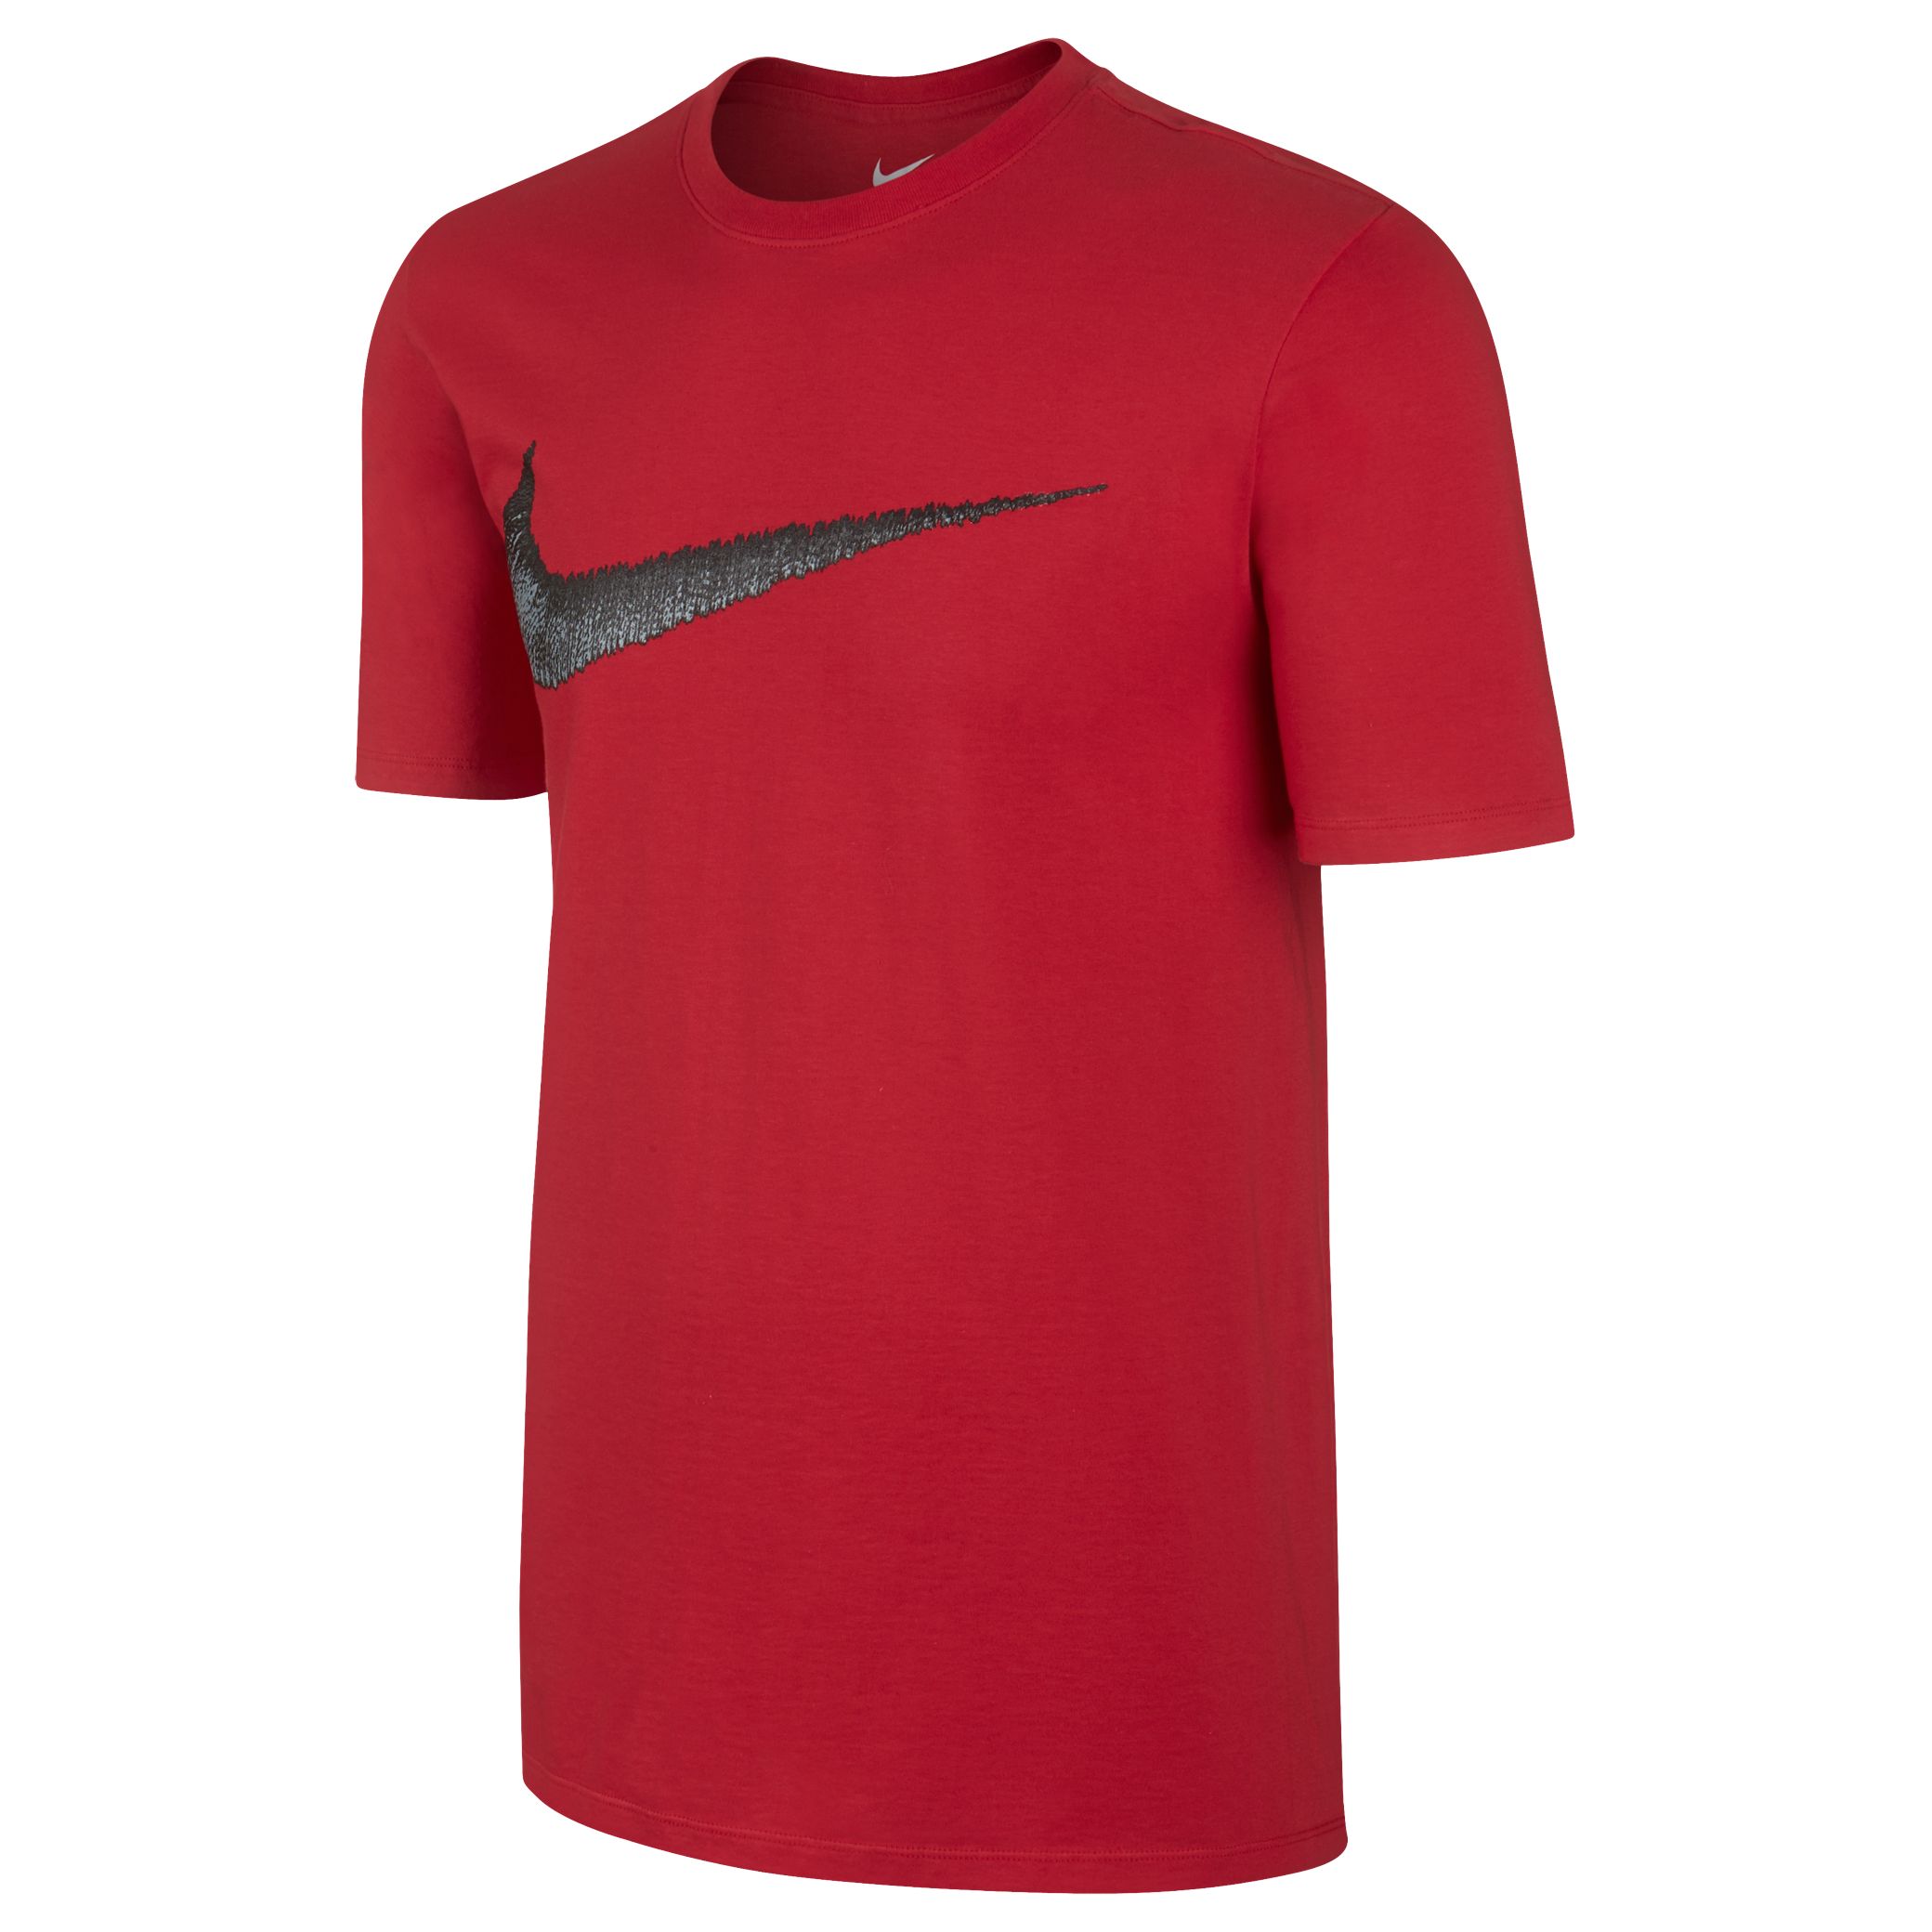 Nike Sportswear Swoosh Cotton T-Shirt